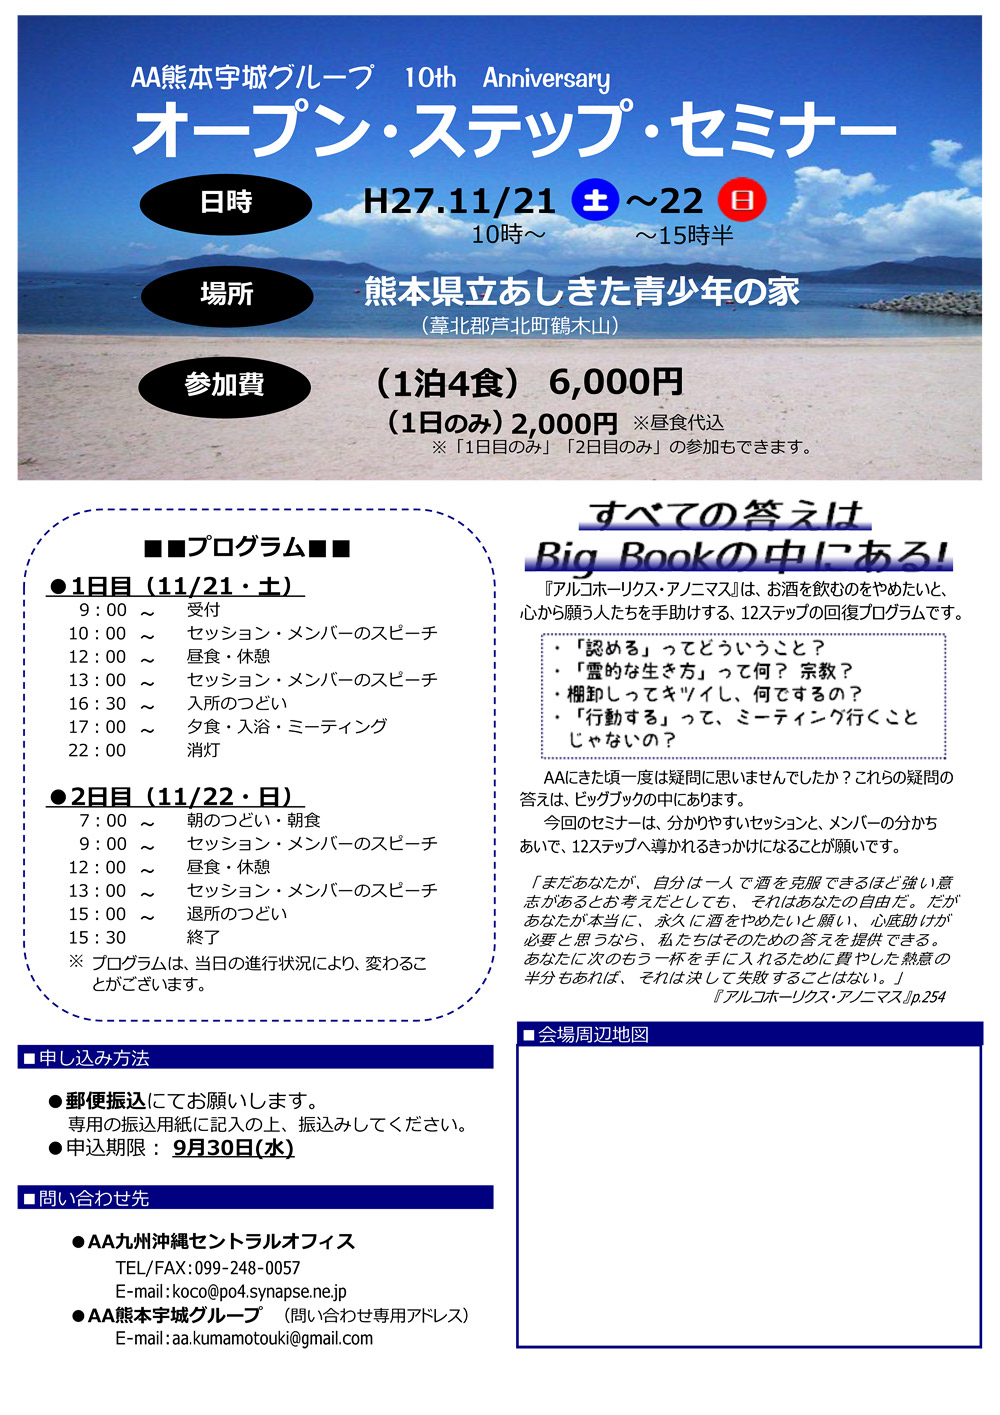 http://www.ieji.org/dilemma/2015/11/16/Kumamoto2015-1000.jpg